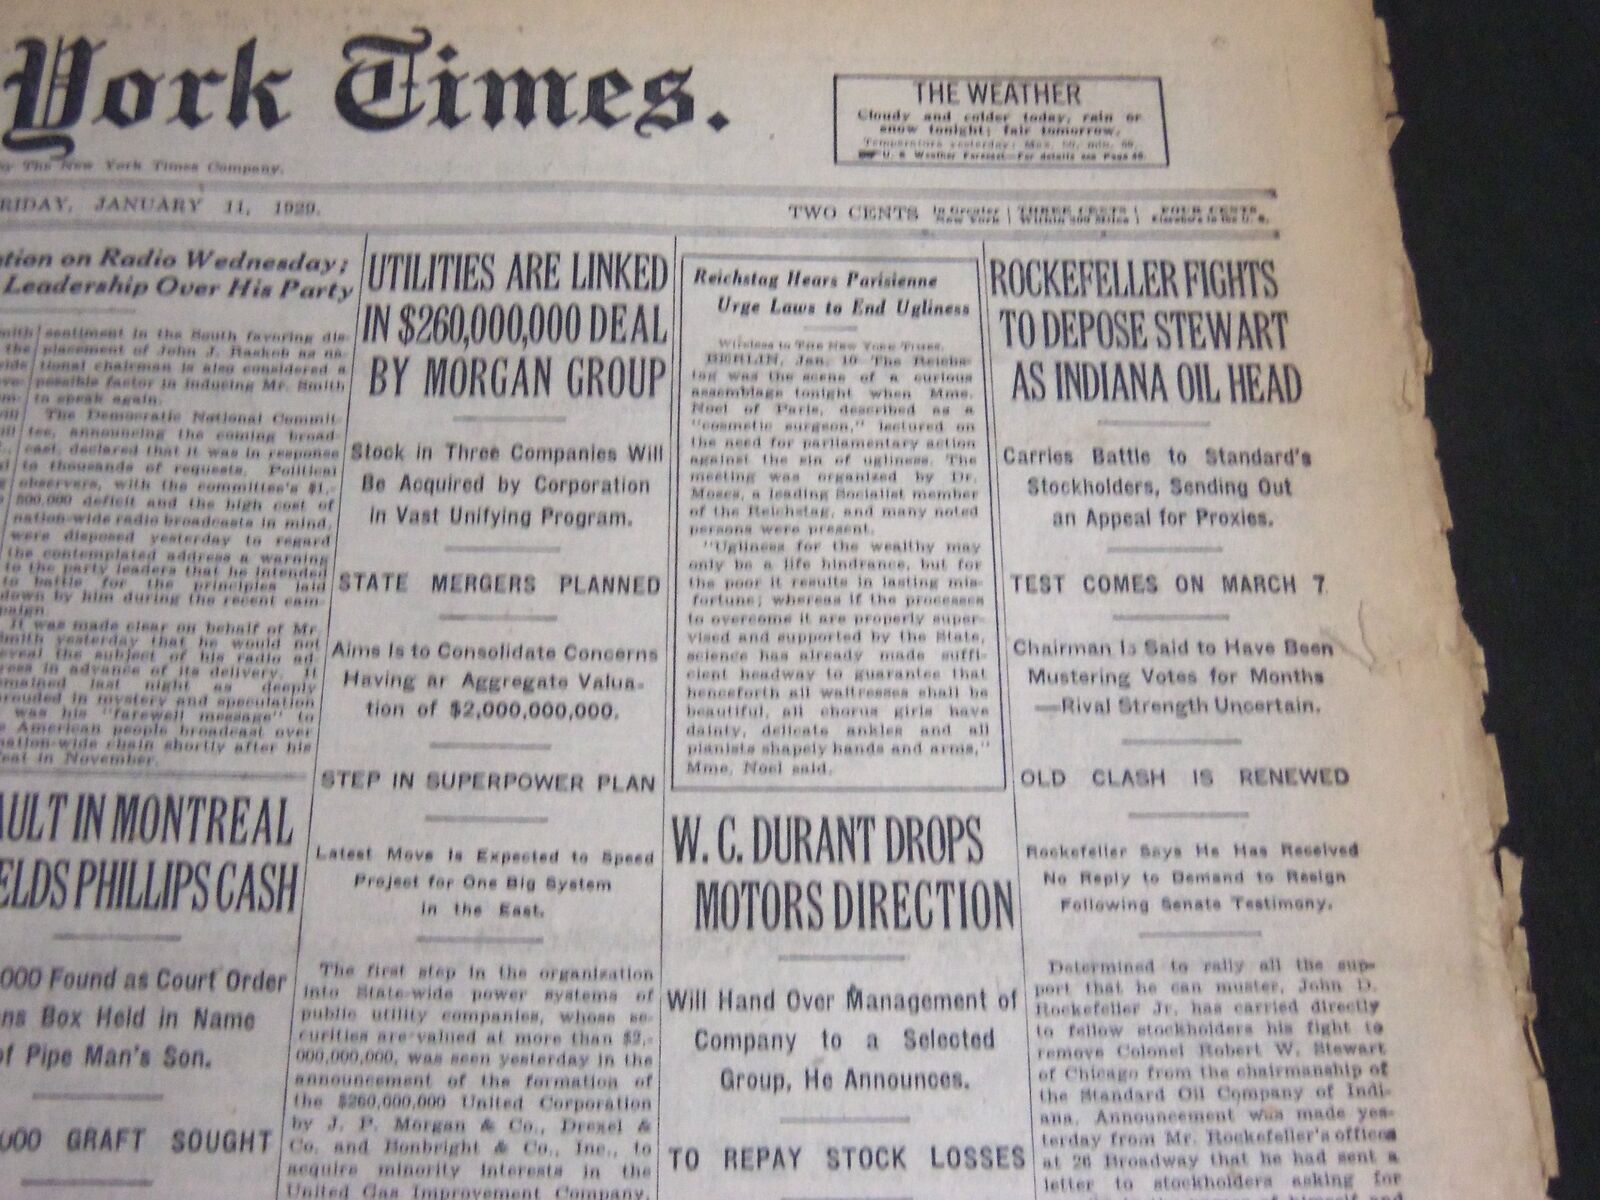 1929 JAN 11 NEW YORK TIMES - ROCKEFELLER FIGHTS TO DEPOSE STEWART - NT 6894